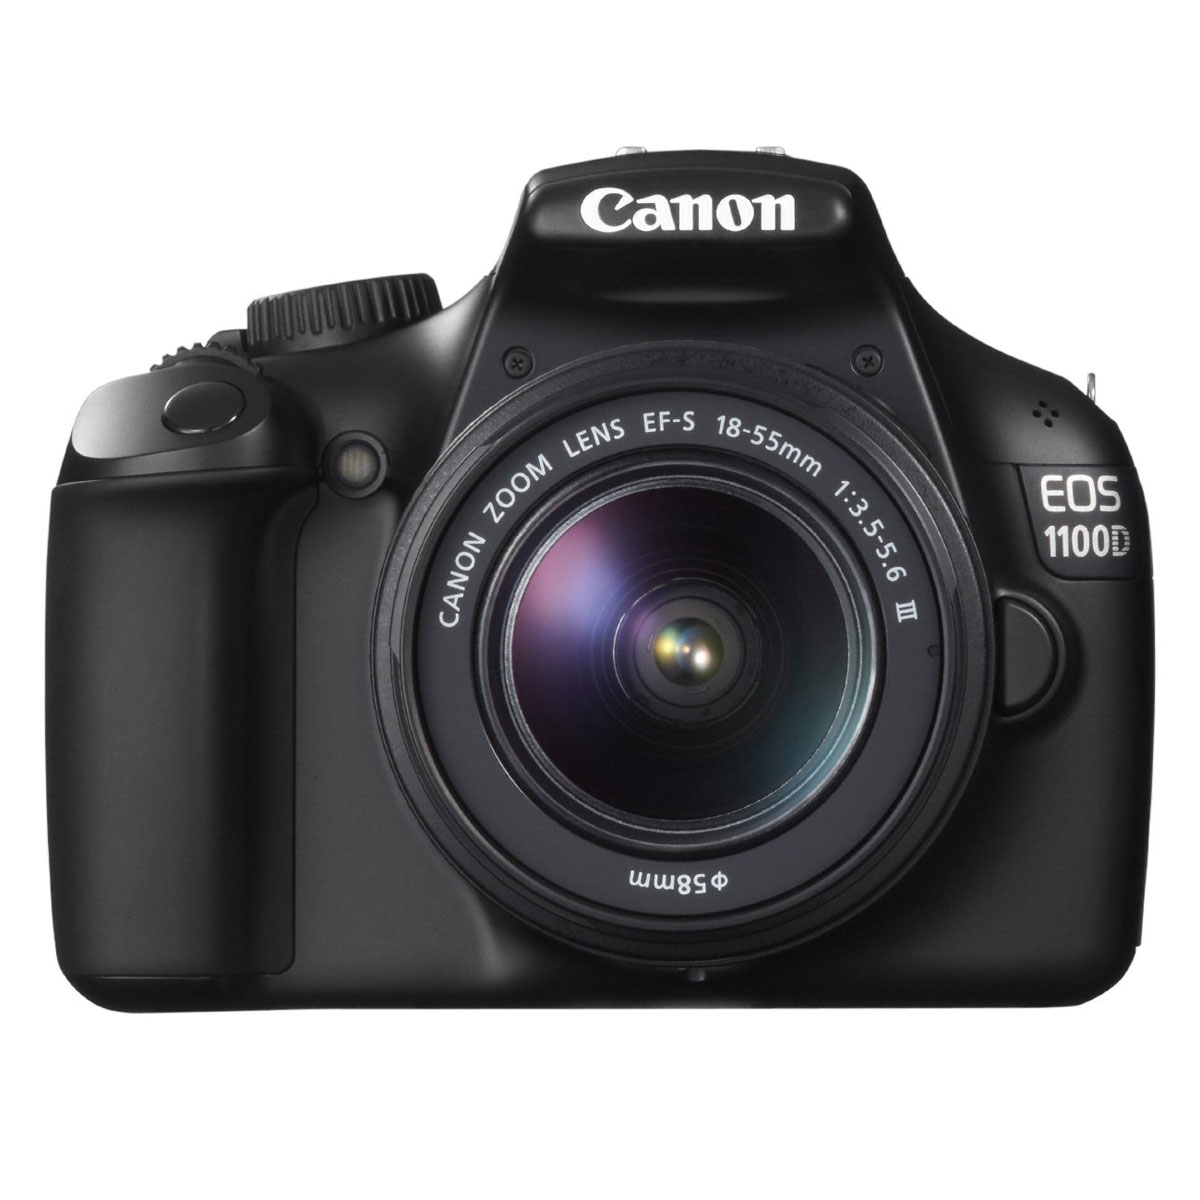  Canon  EOS  1100D  Objectif EF S 18 55 mm f 3 5 5 6 III DC 